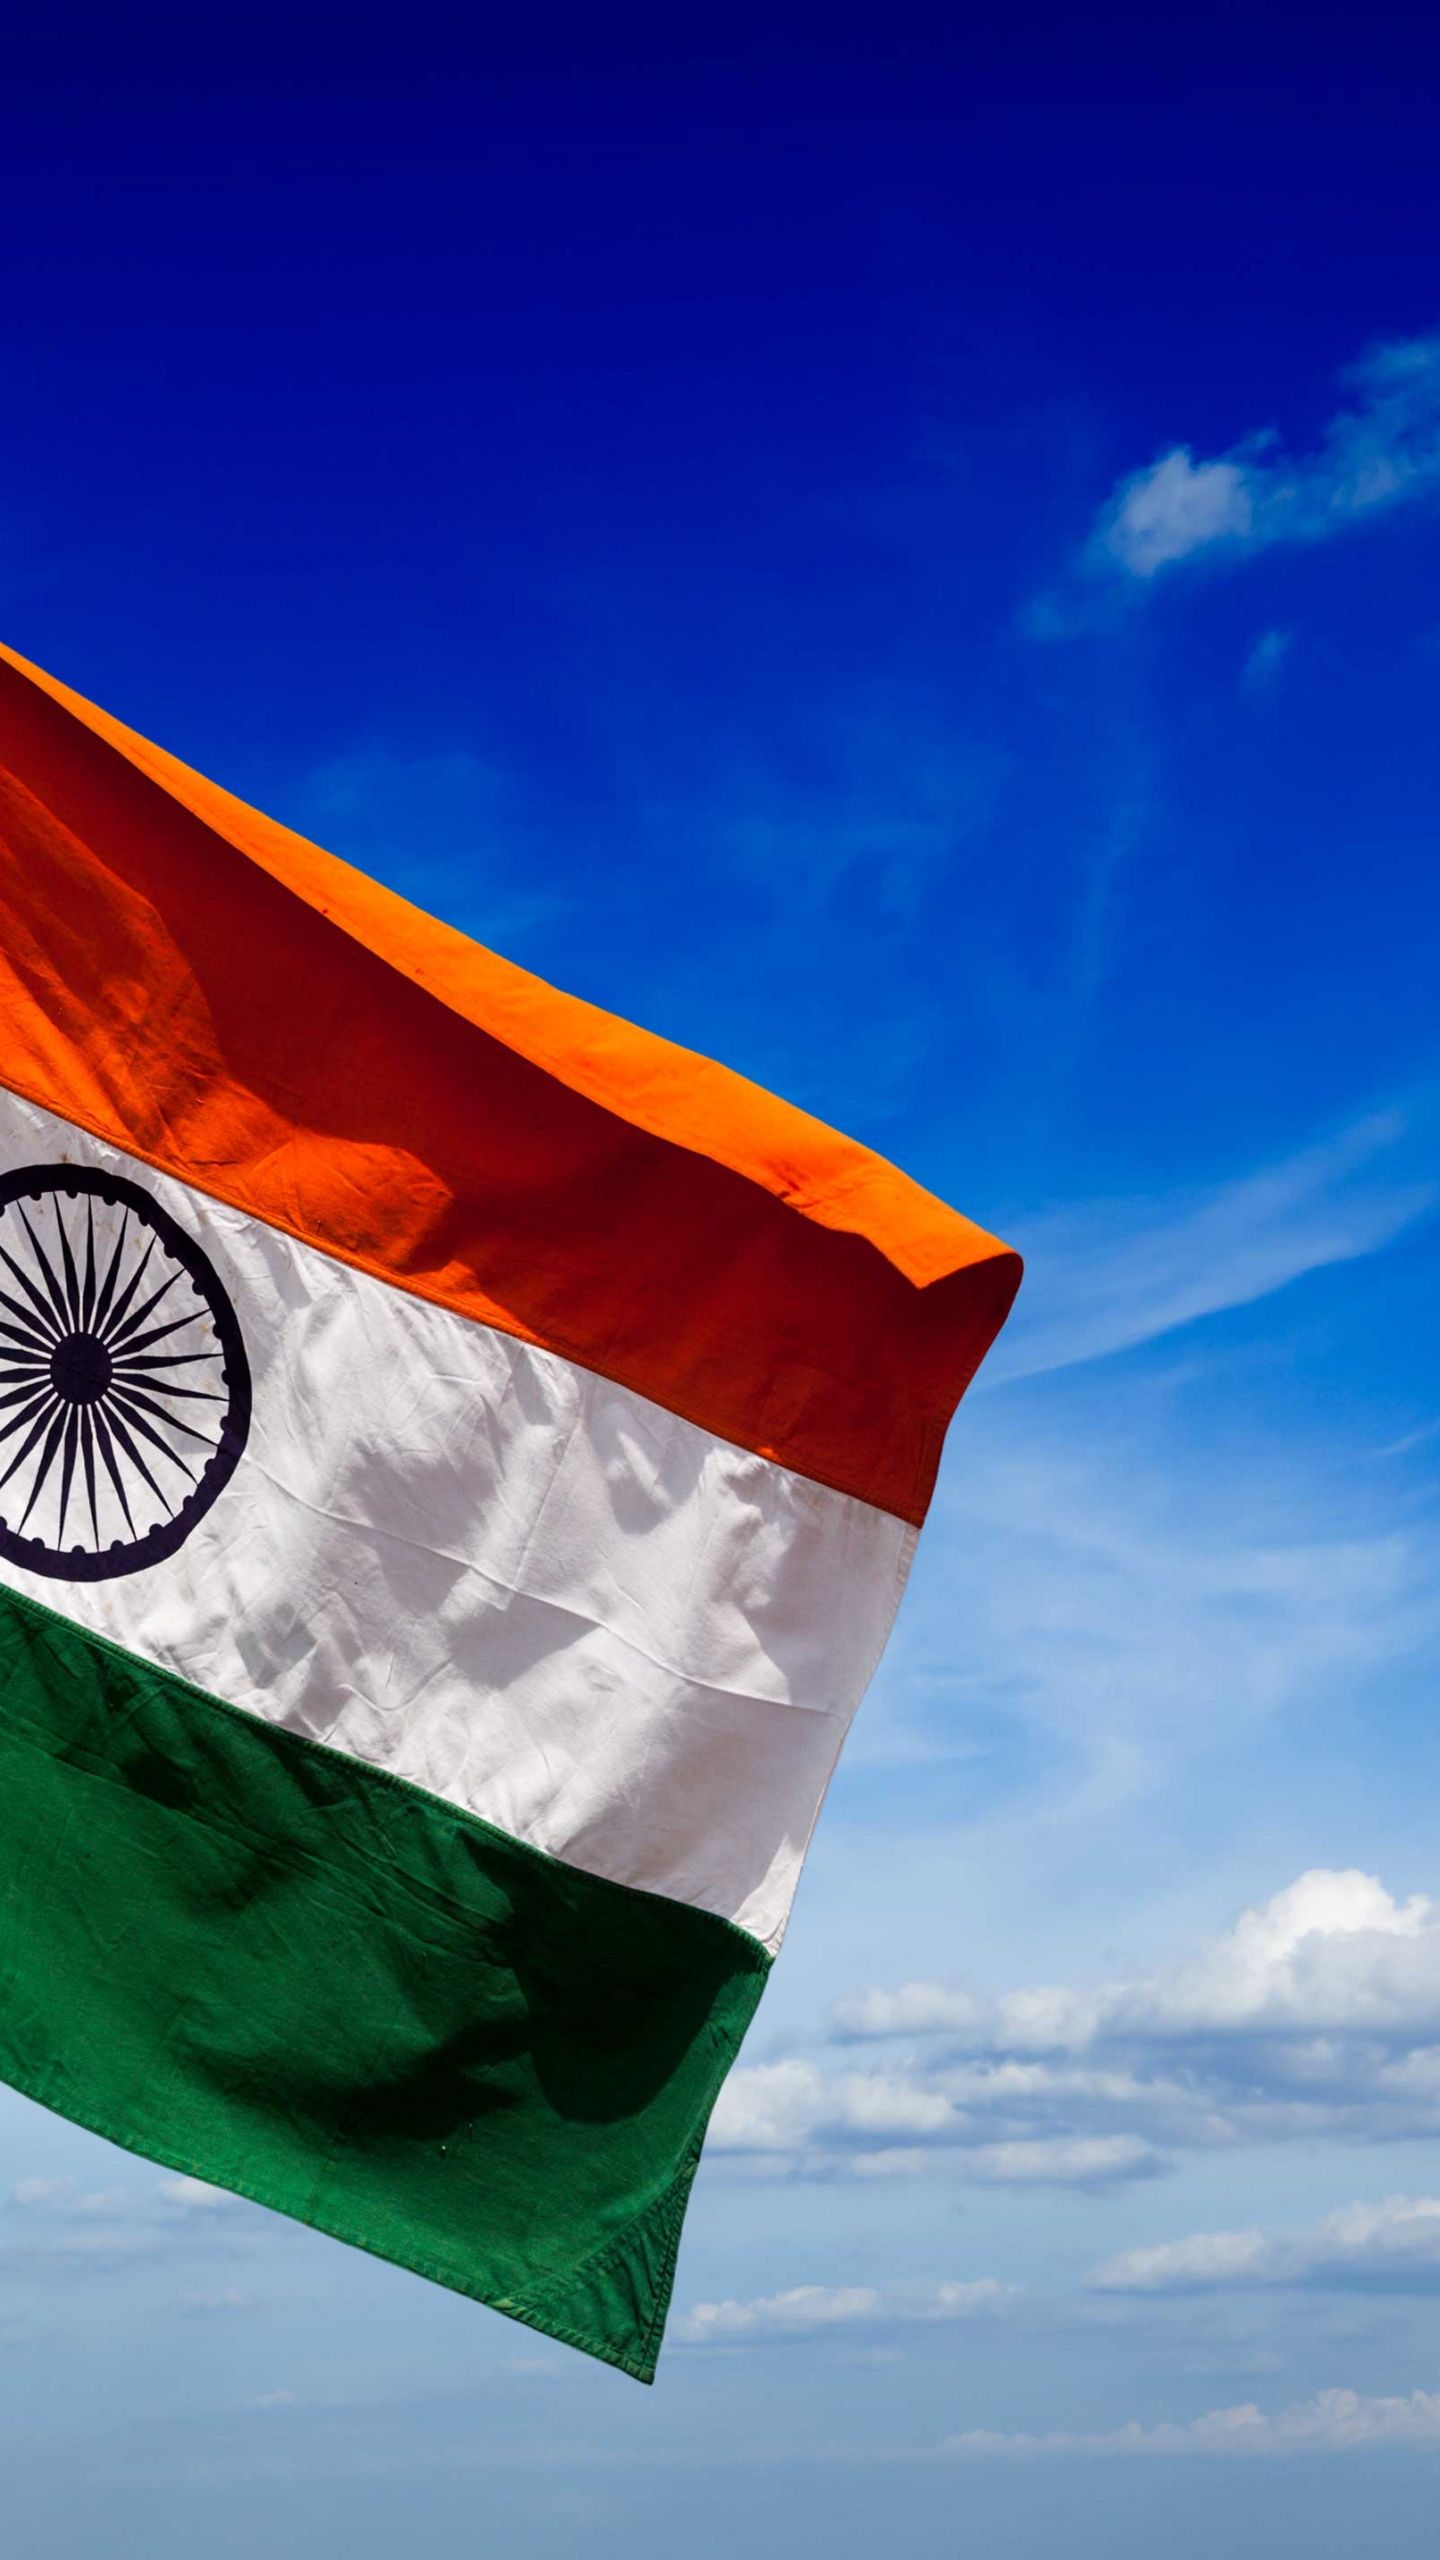 Free download Indian Flag Wallpaper HD Image Download